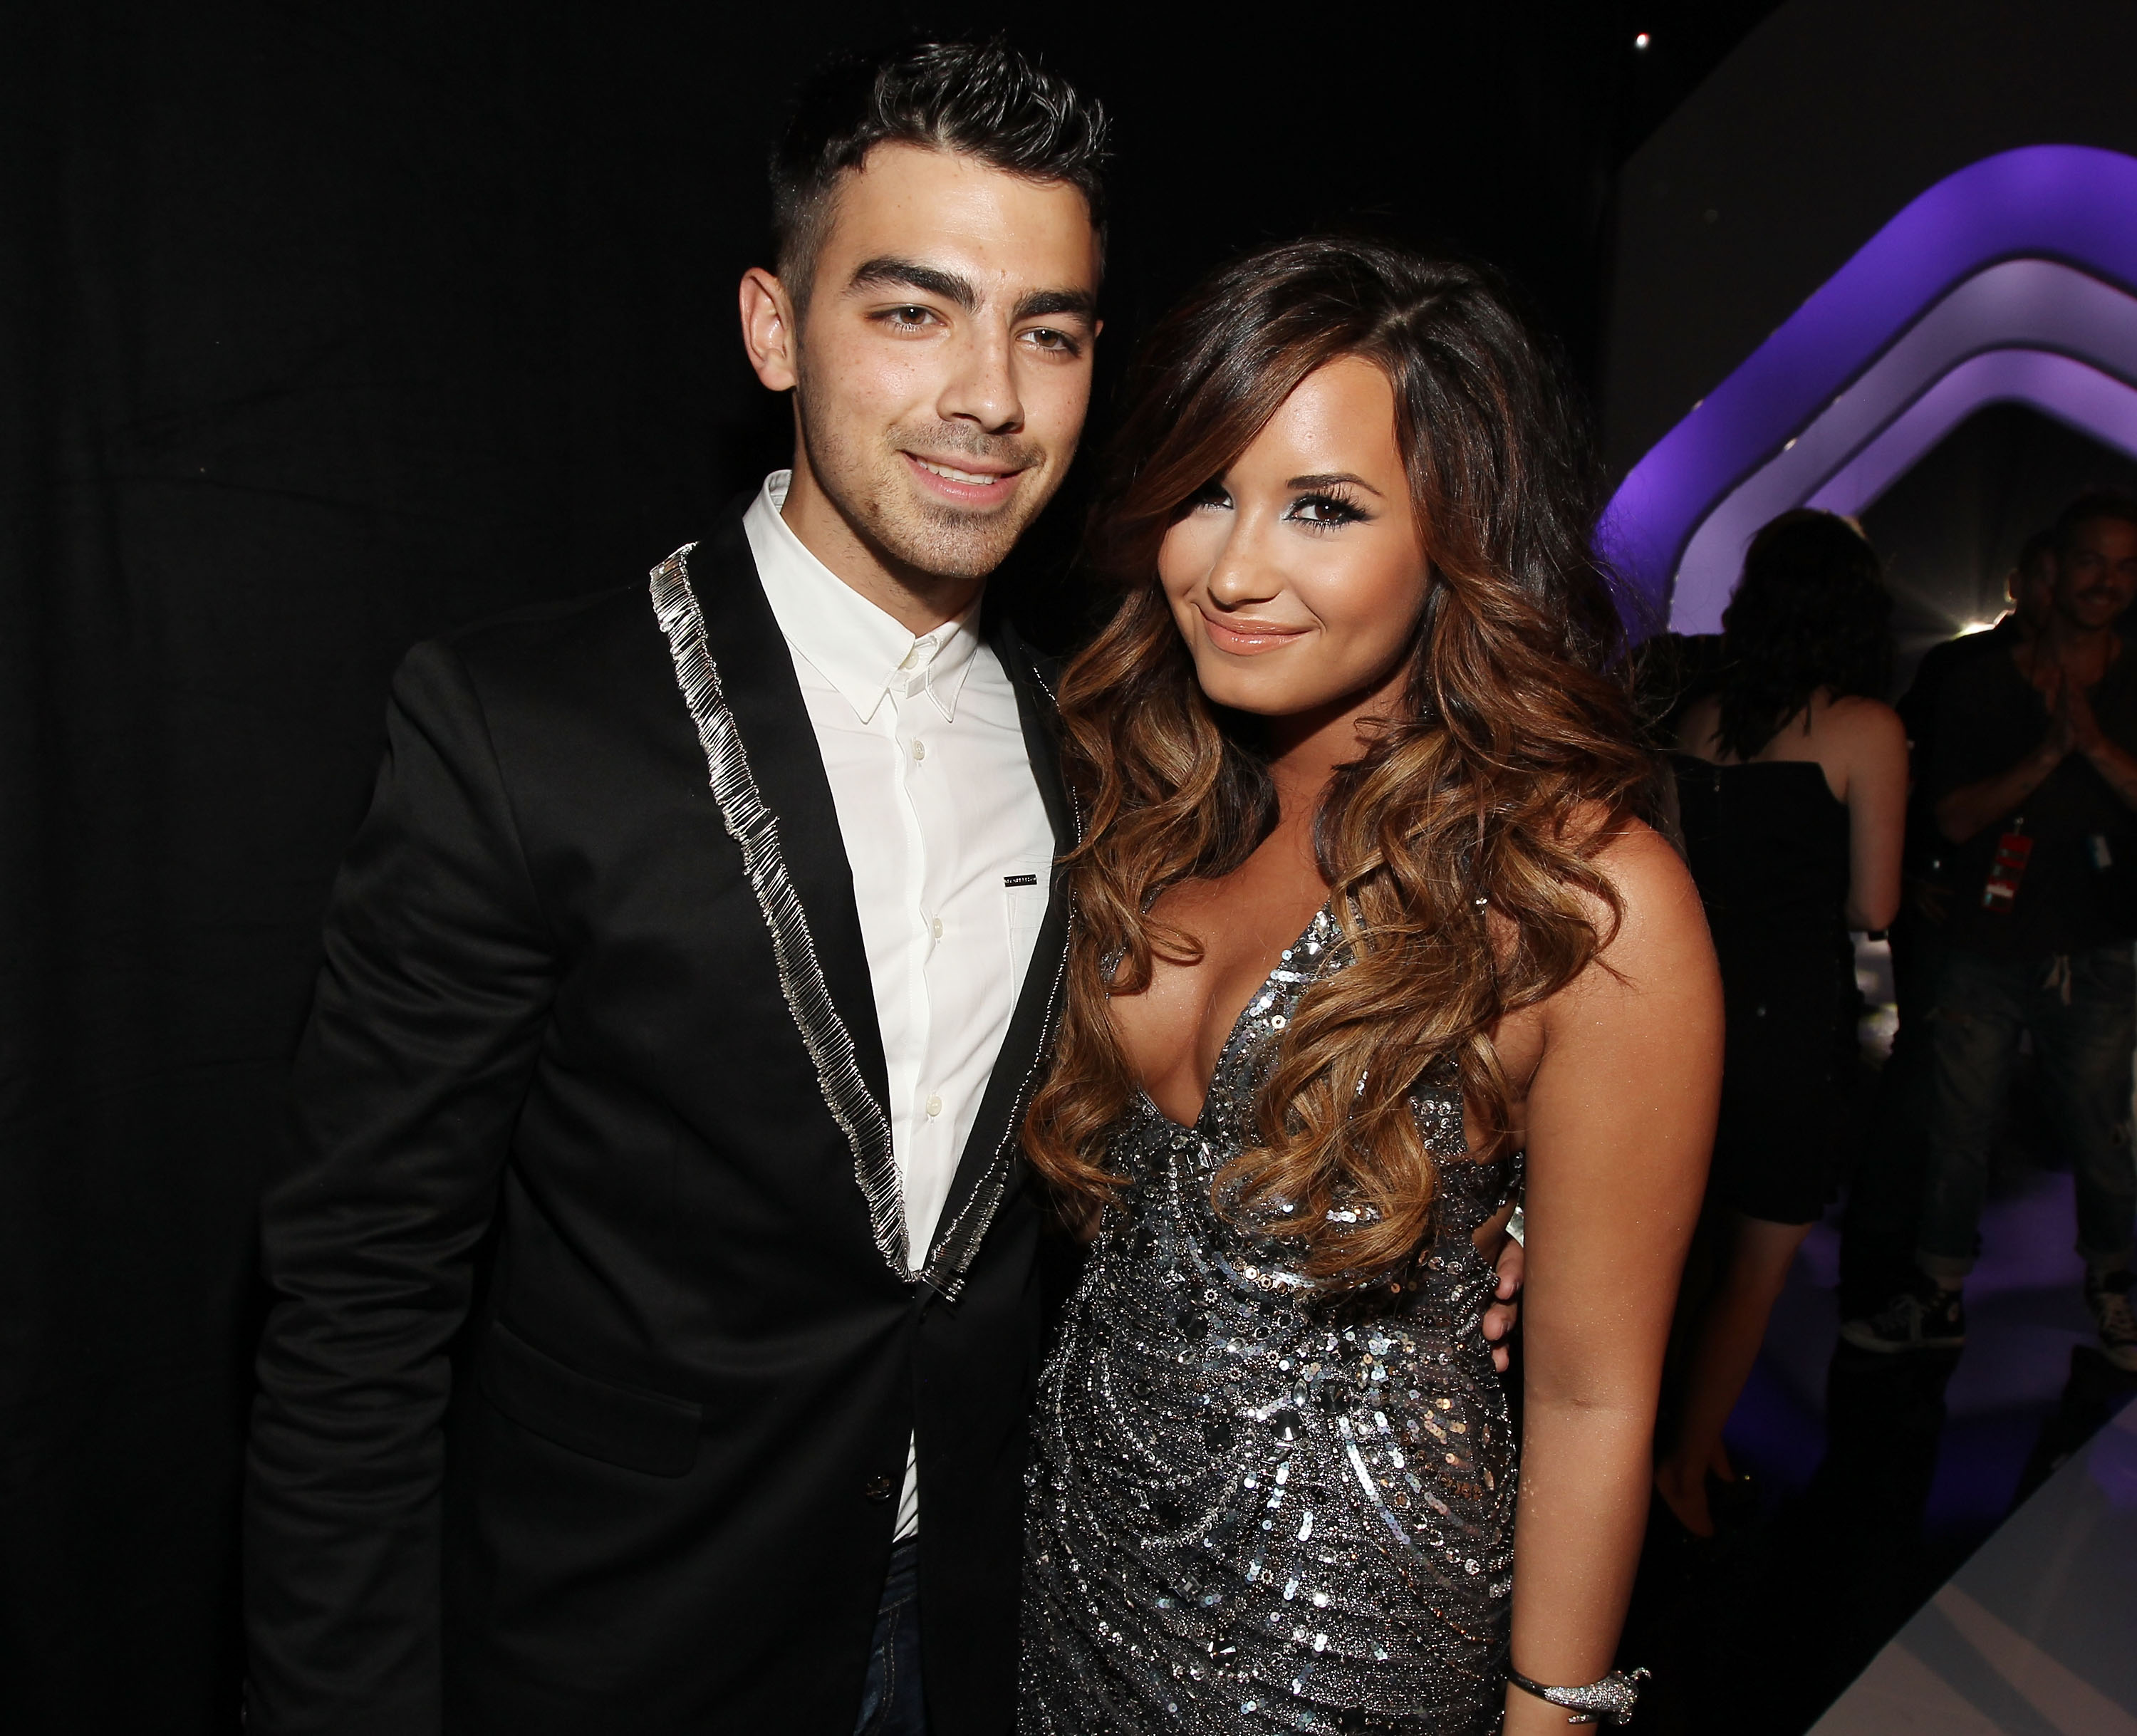 Joe Jonas and Demi Lovato pictured at the 2011 MTV VMAs